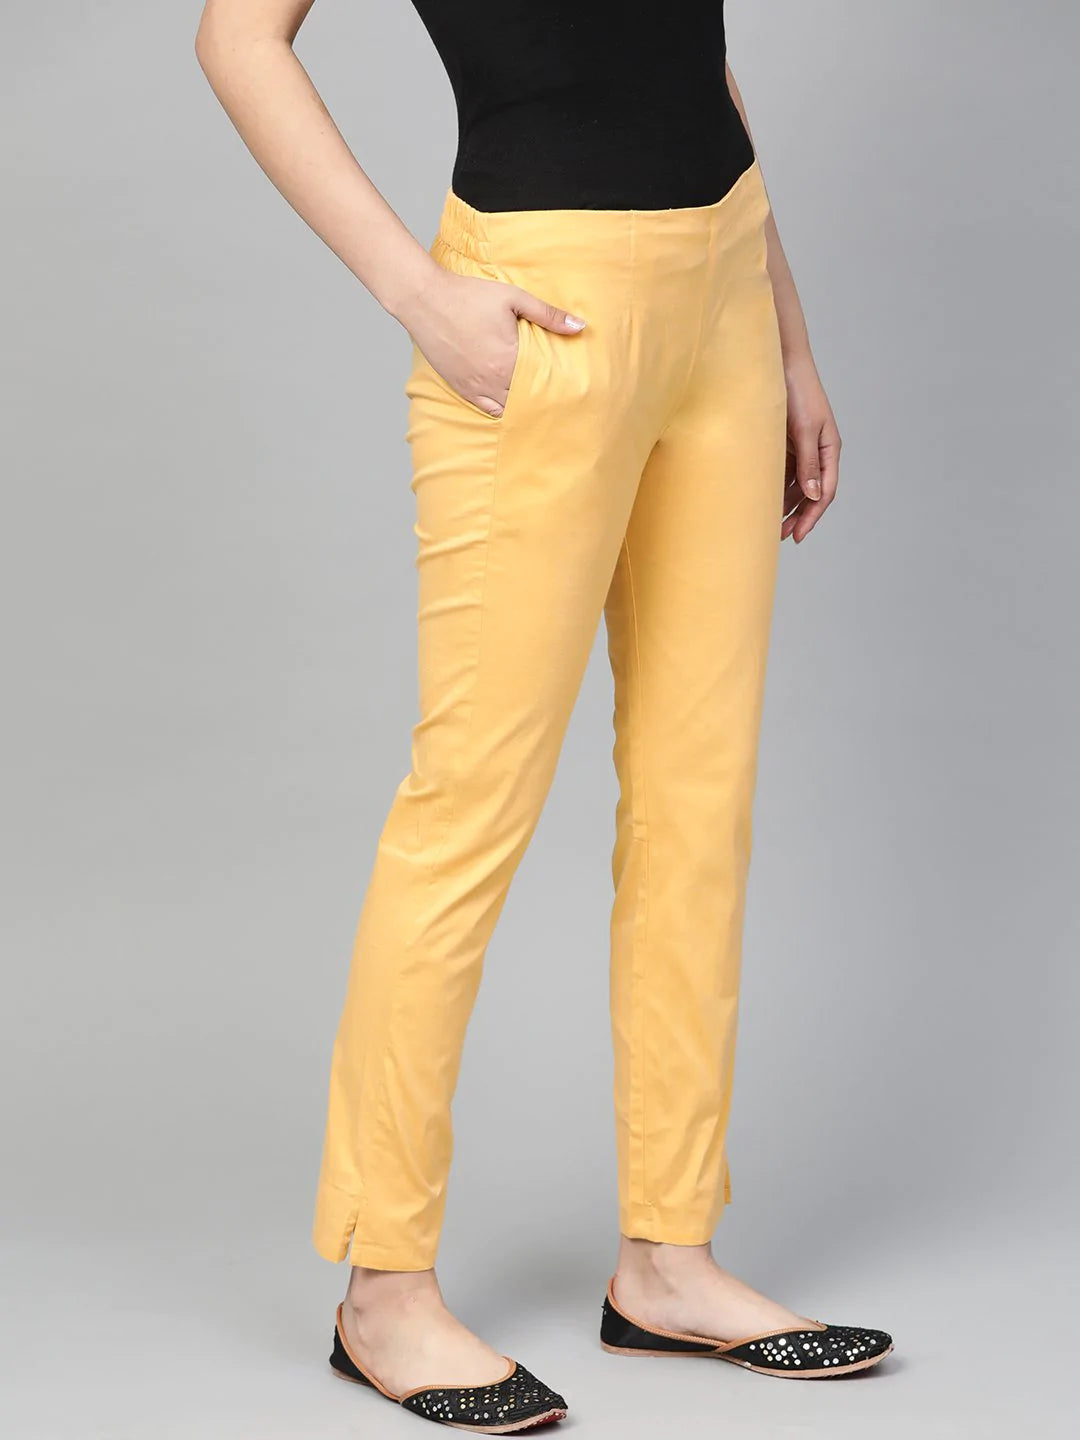 Jompers Women Beige Smart Slim Fit Solid Regular Trousers ( JOP 2119 Beige )